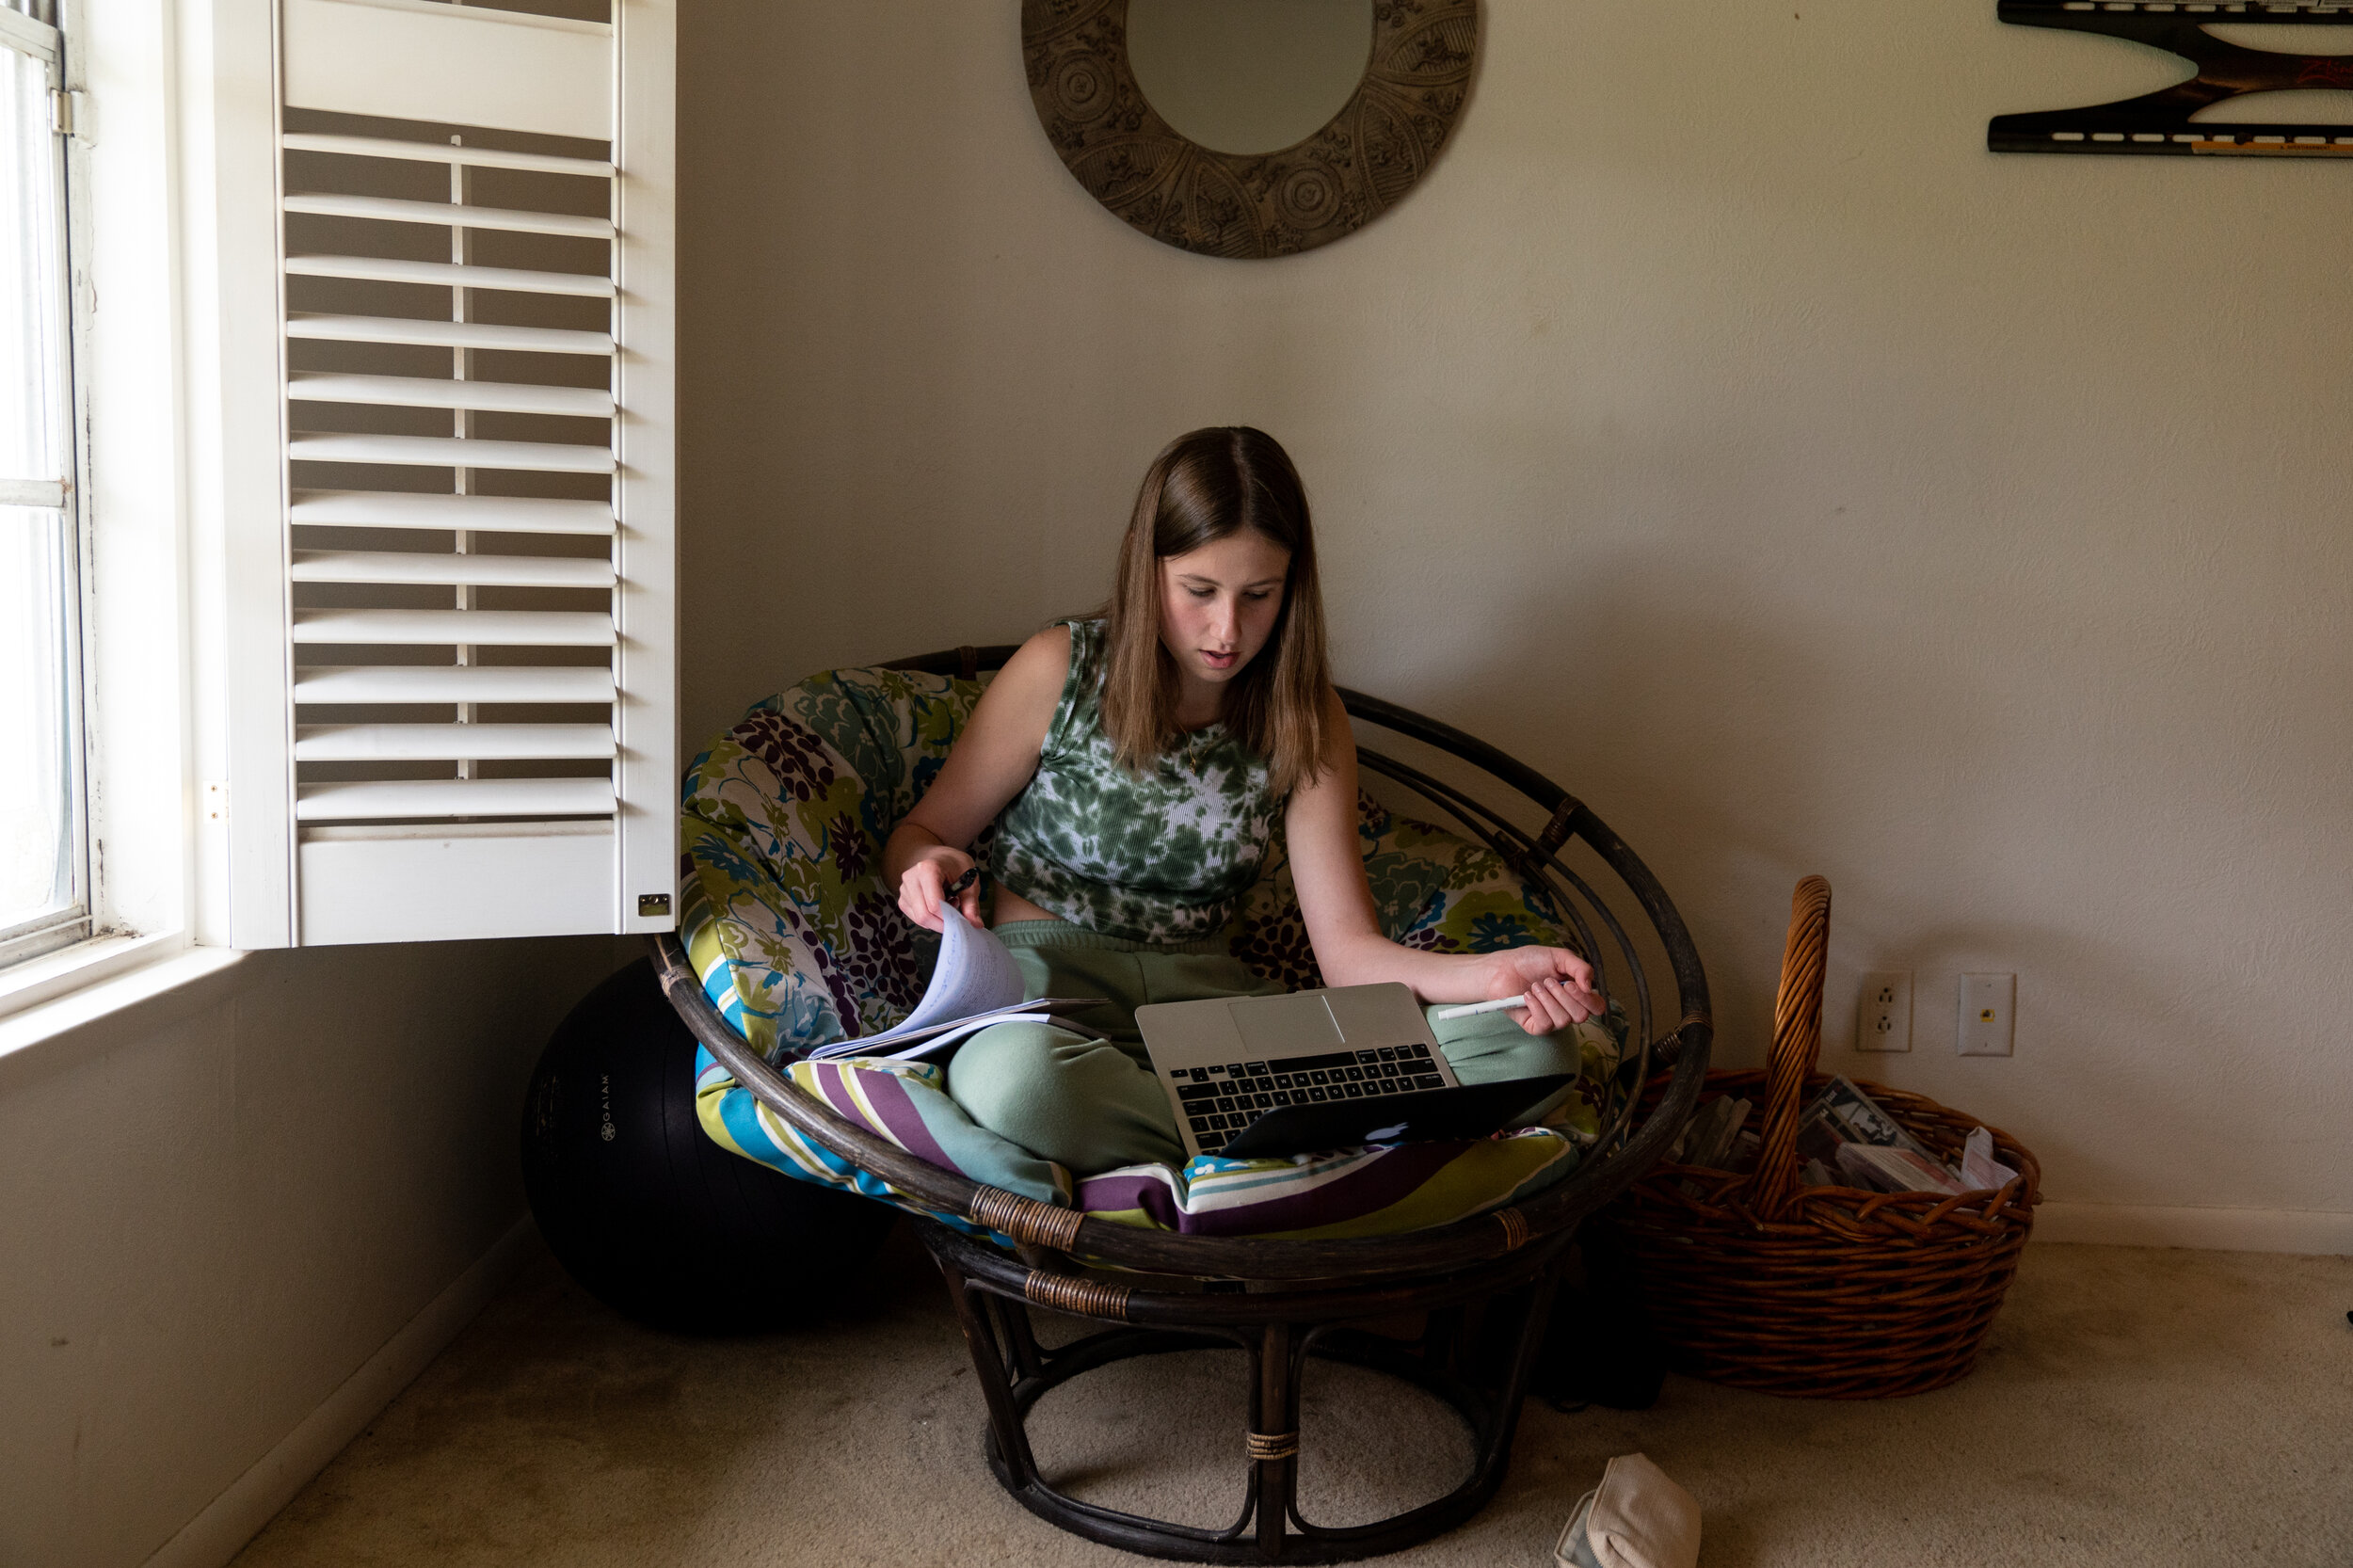  CORPUS CHRISTI, TEXAS - September 9, 2020: After running errands, Ella Cole, 17, settles in to do homework at home. 